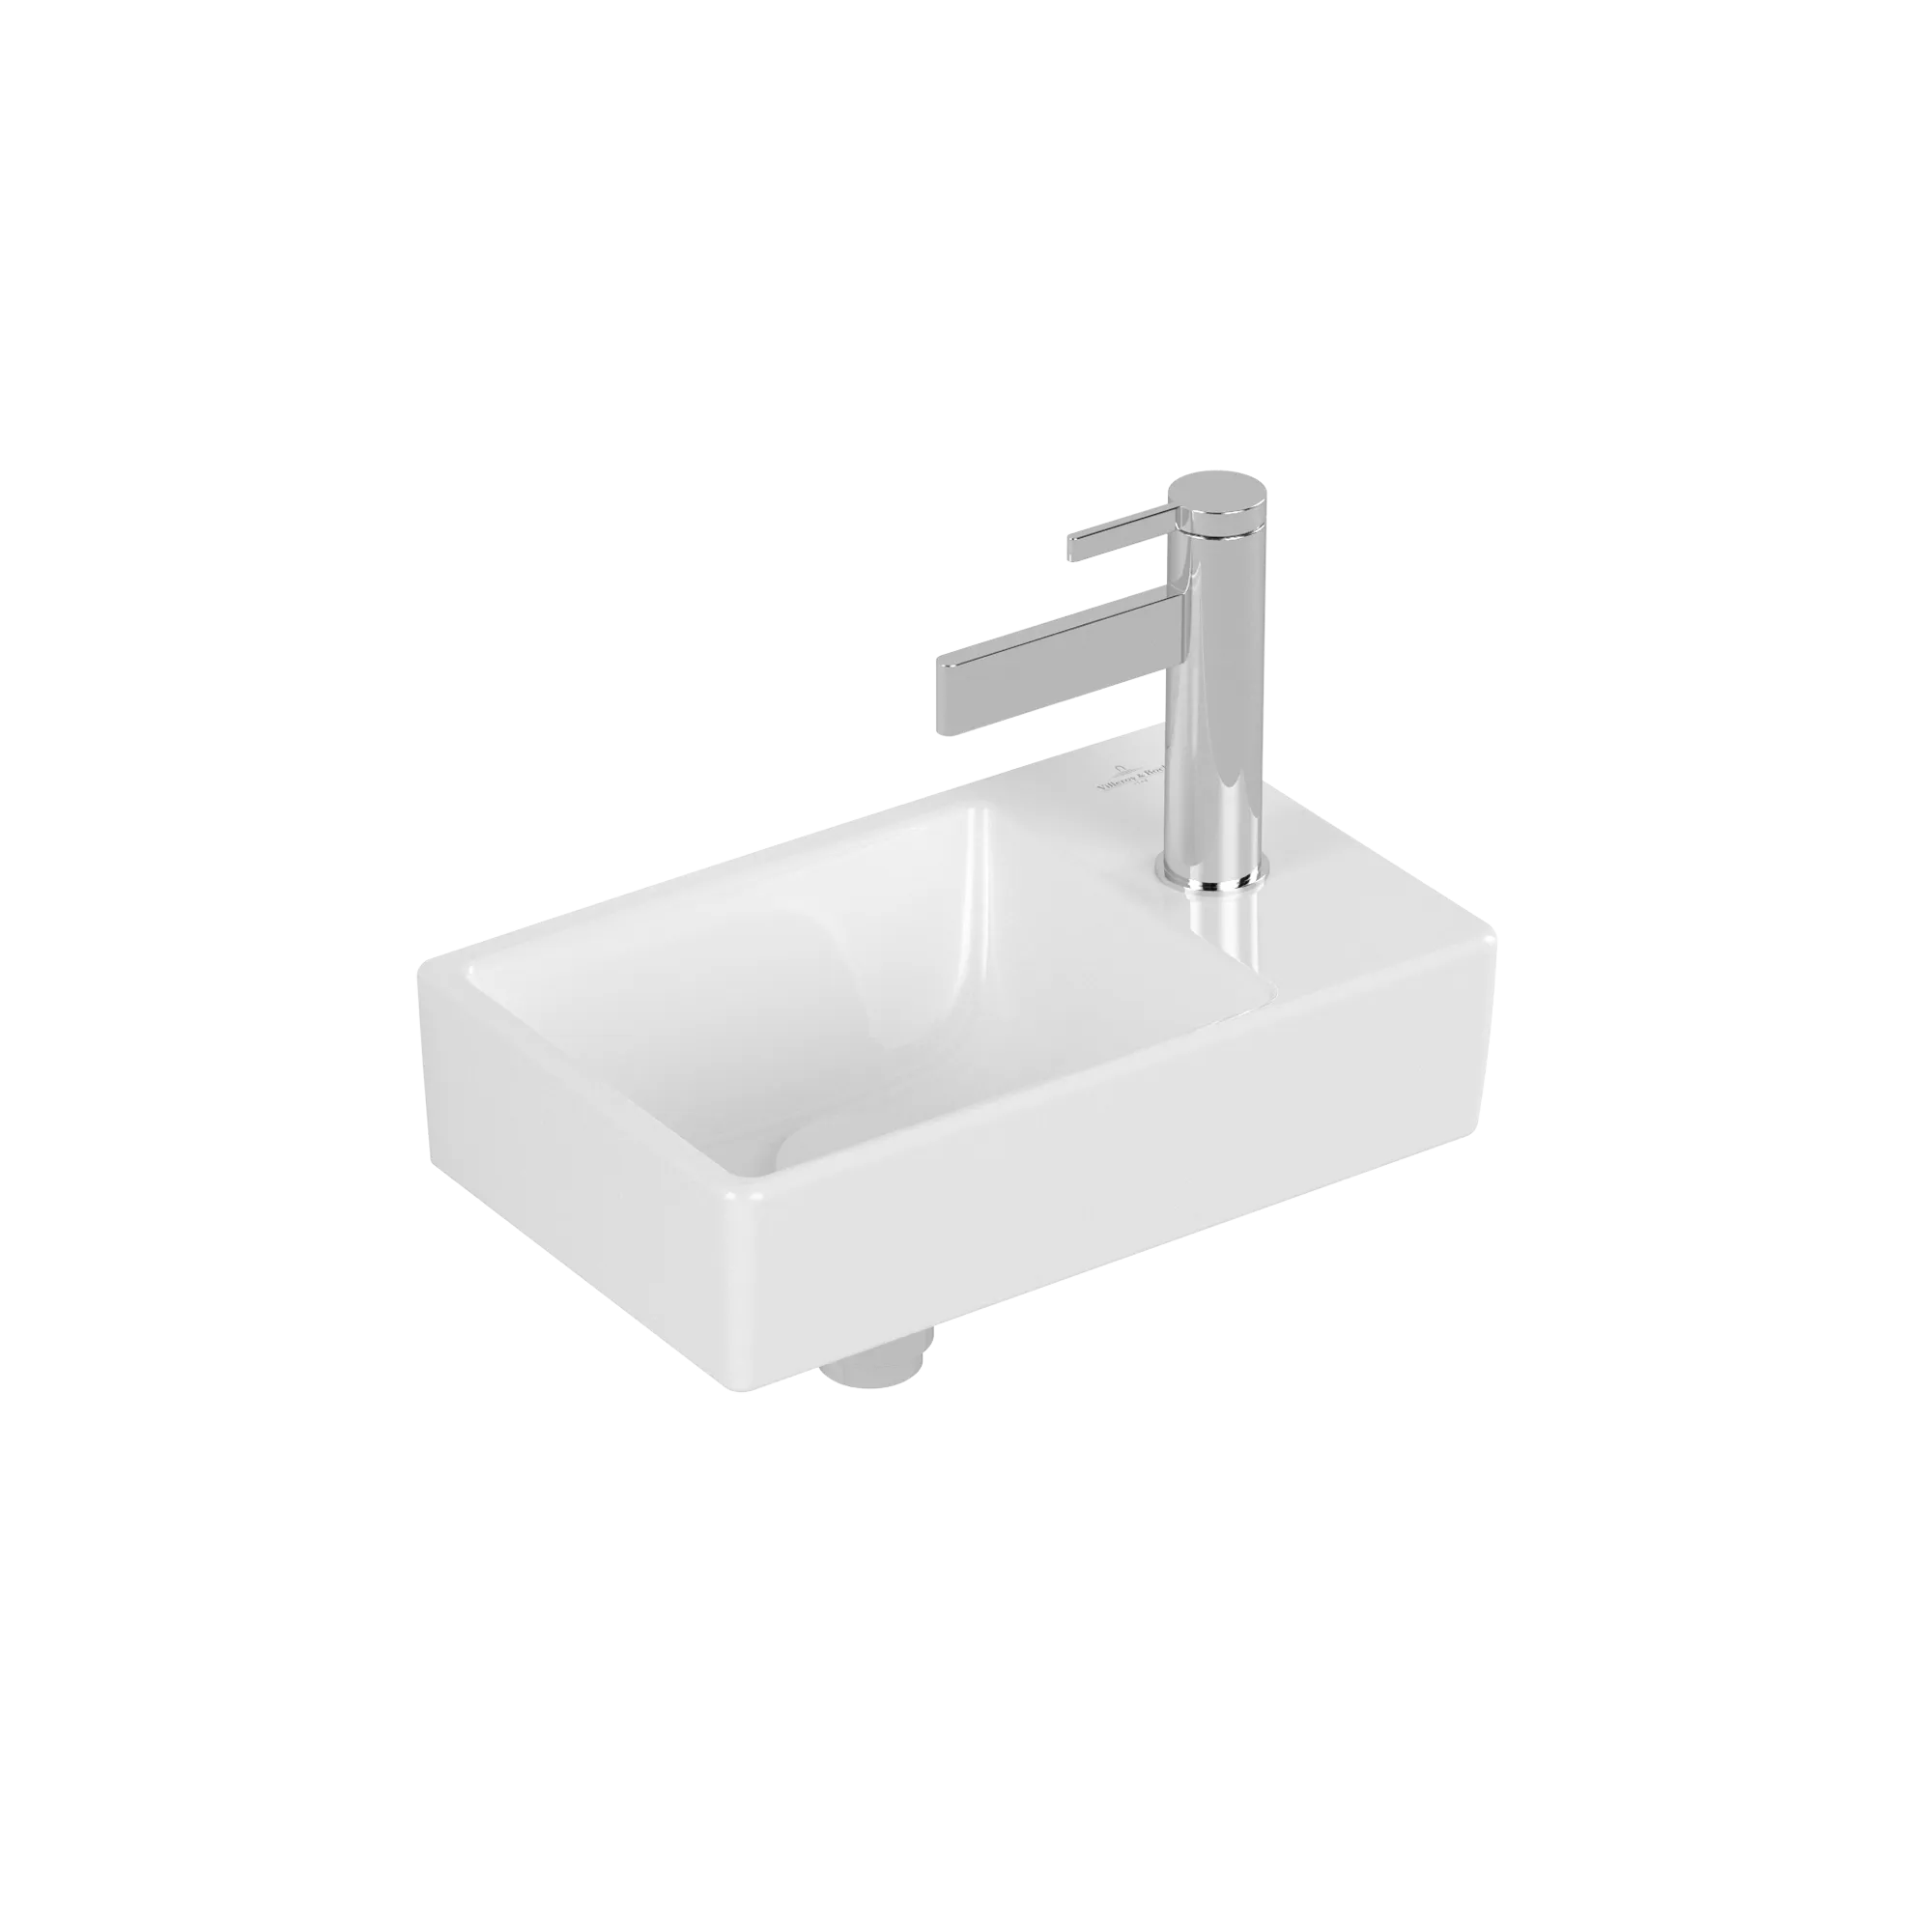 VILLEROY BOCH Avento Handwashbasin, 360 x 220 x 110 mm, White Alpin, without overflow #43003L01 resmi